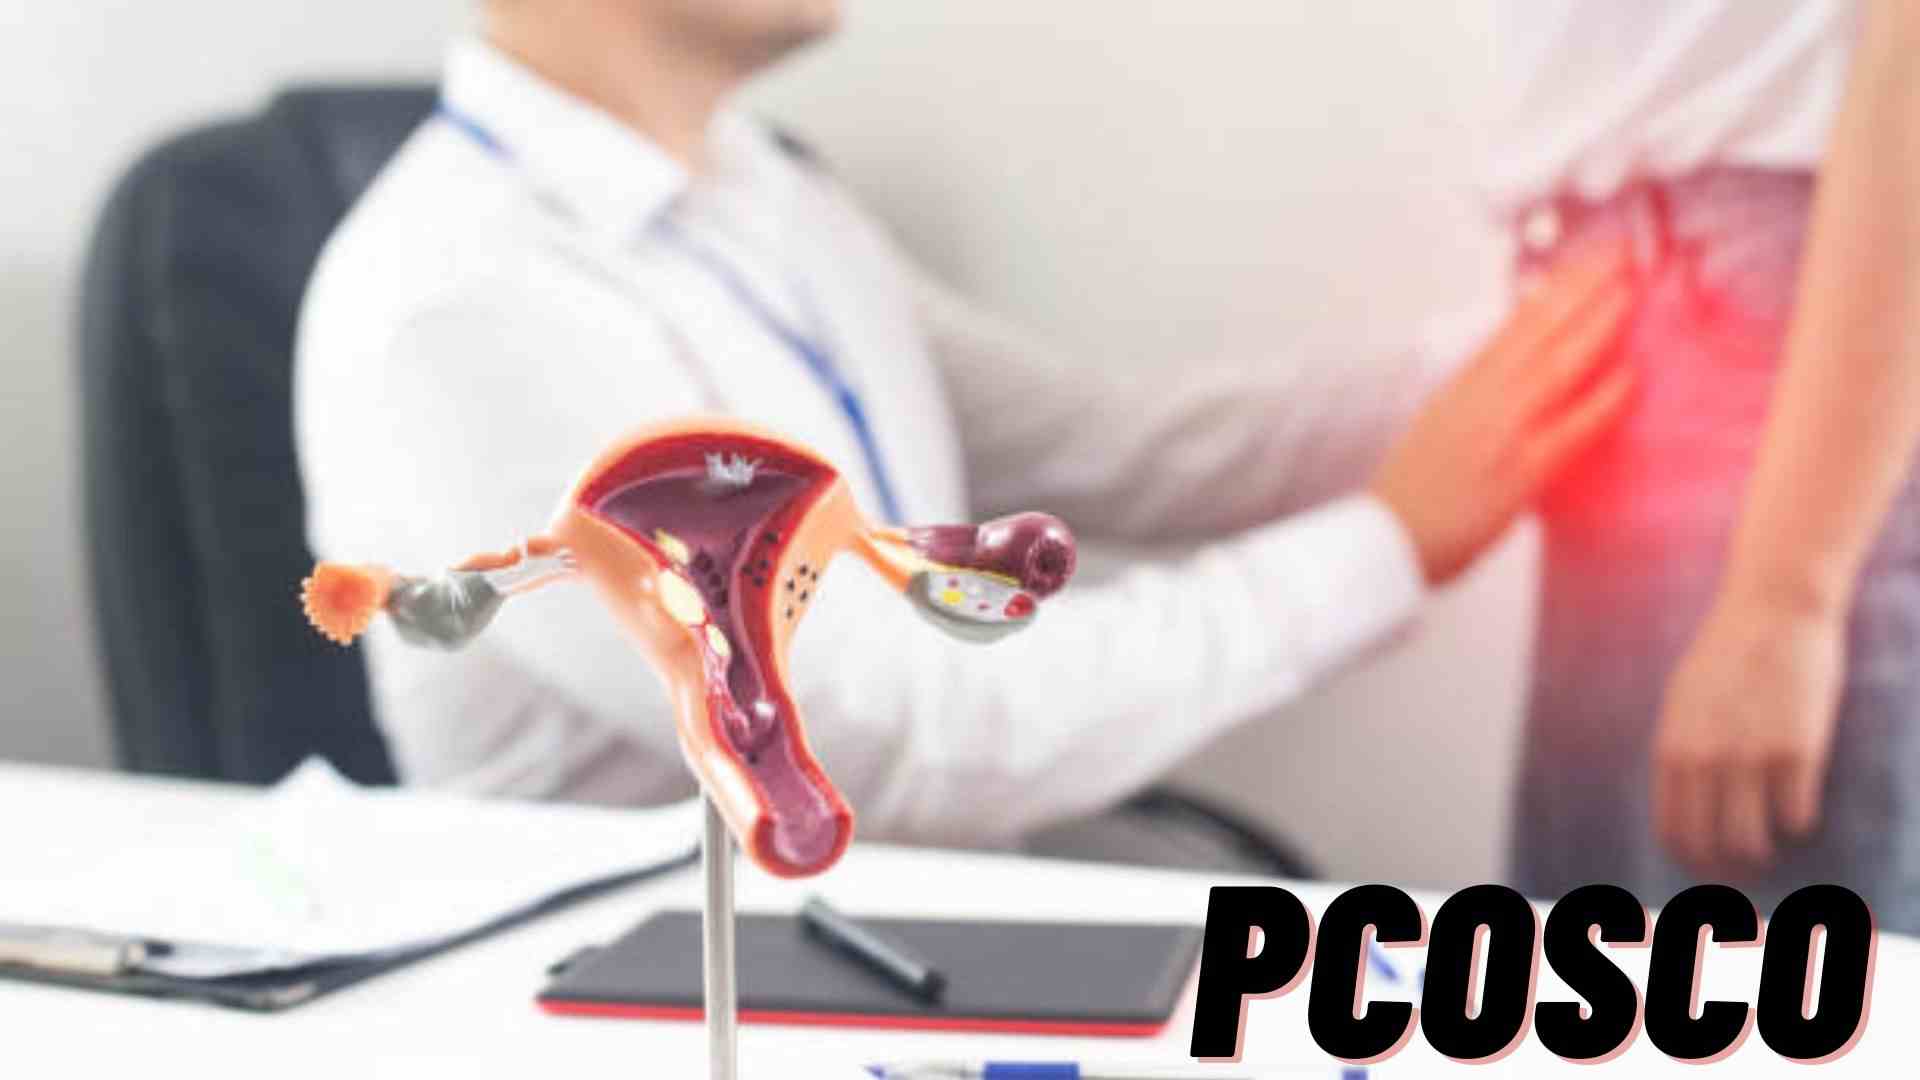 PCOSCO: Polycystic Ovarian Syndrome Symptom & Treatment